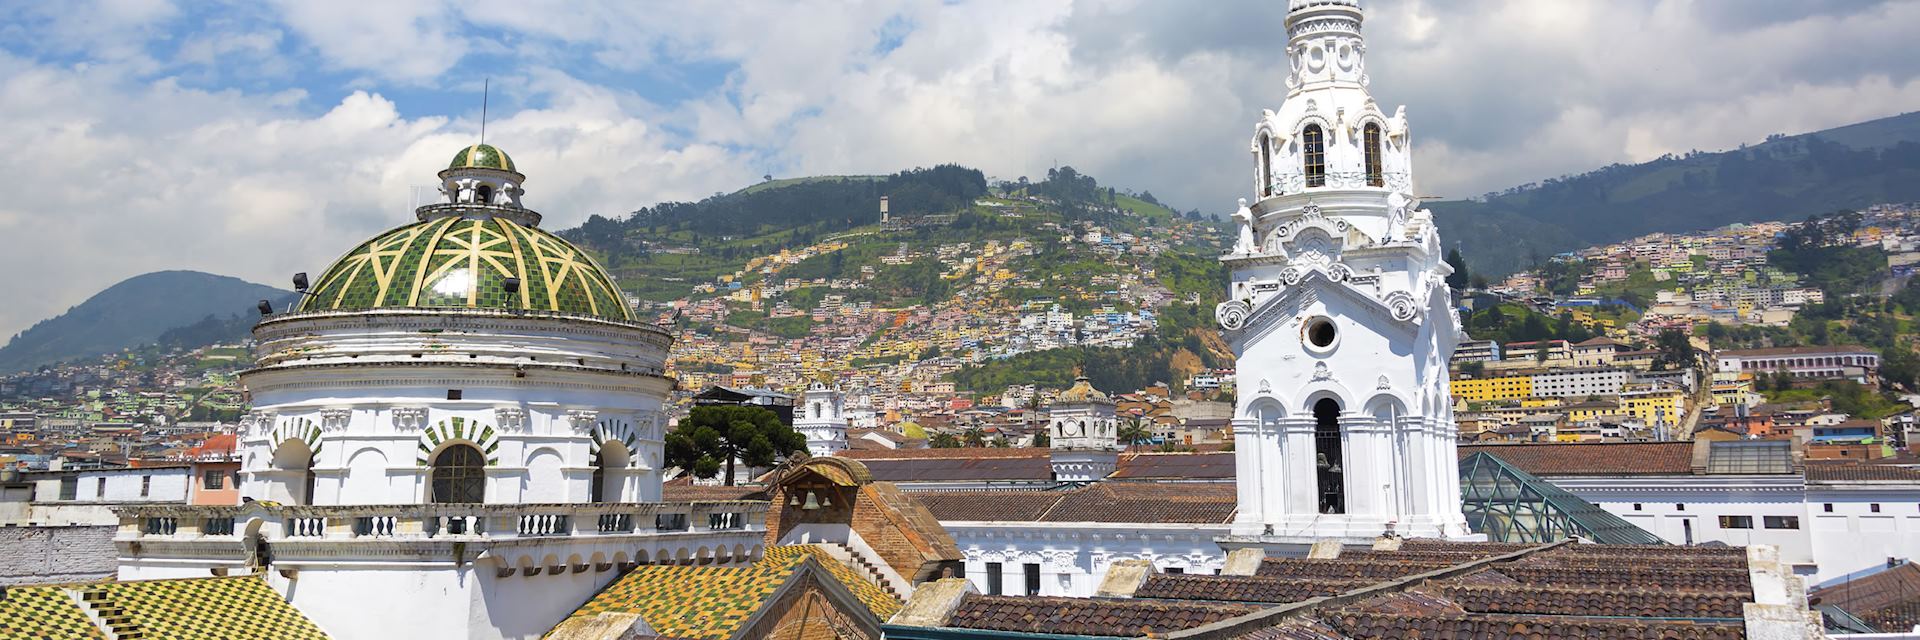 Quito, the Ecuadorian capital